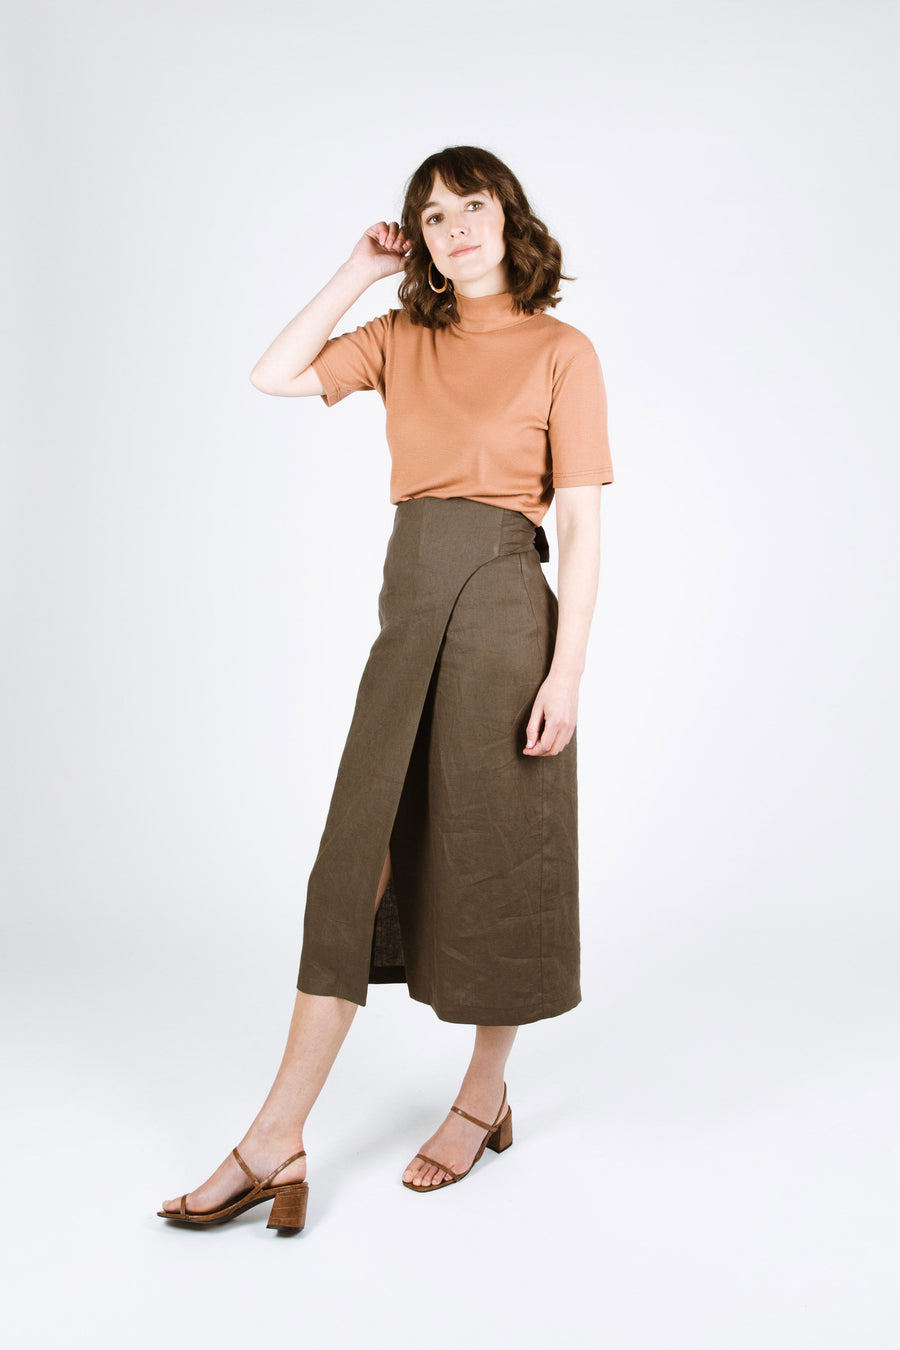 Aura Dress/Skirt pattern- Papercuts